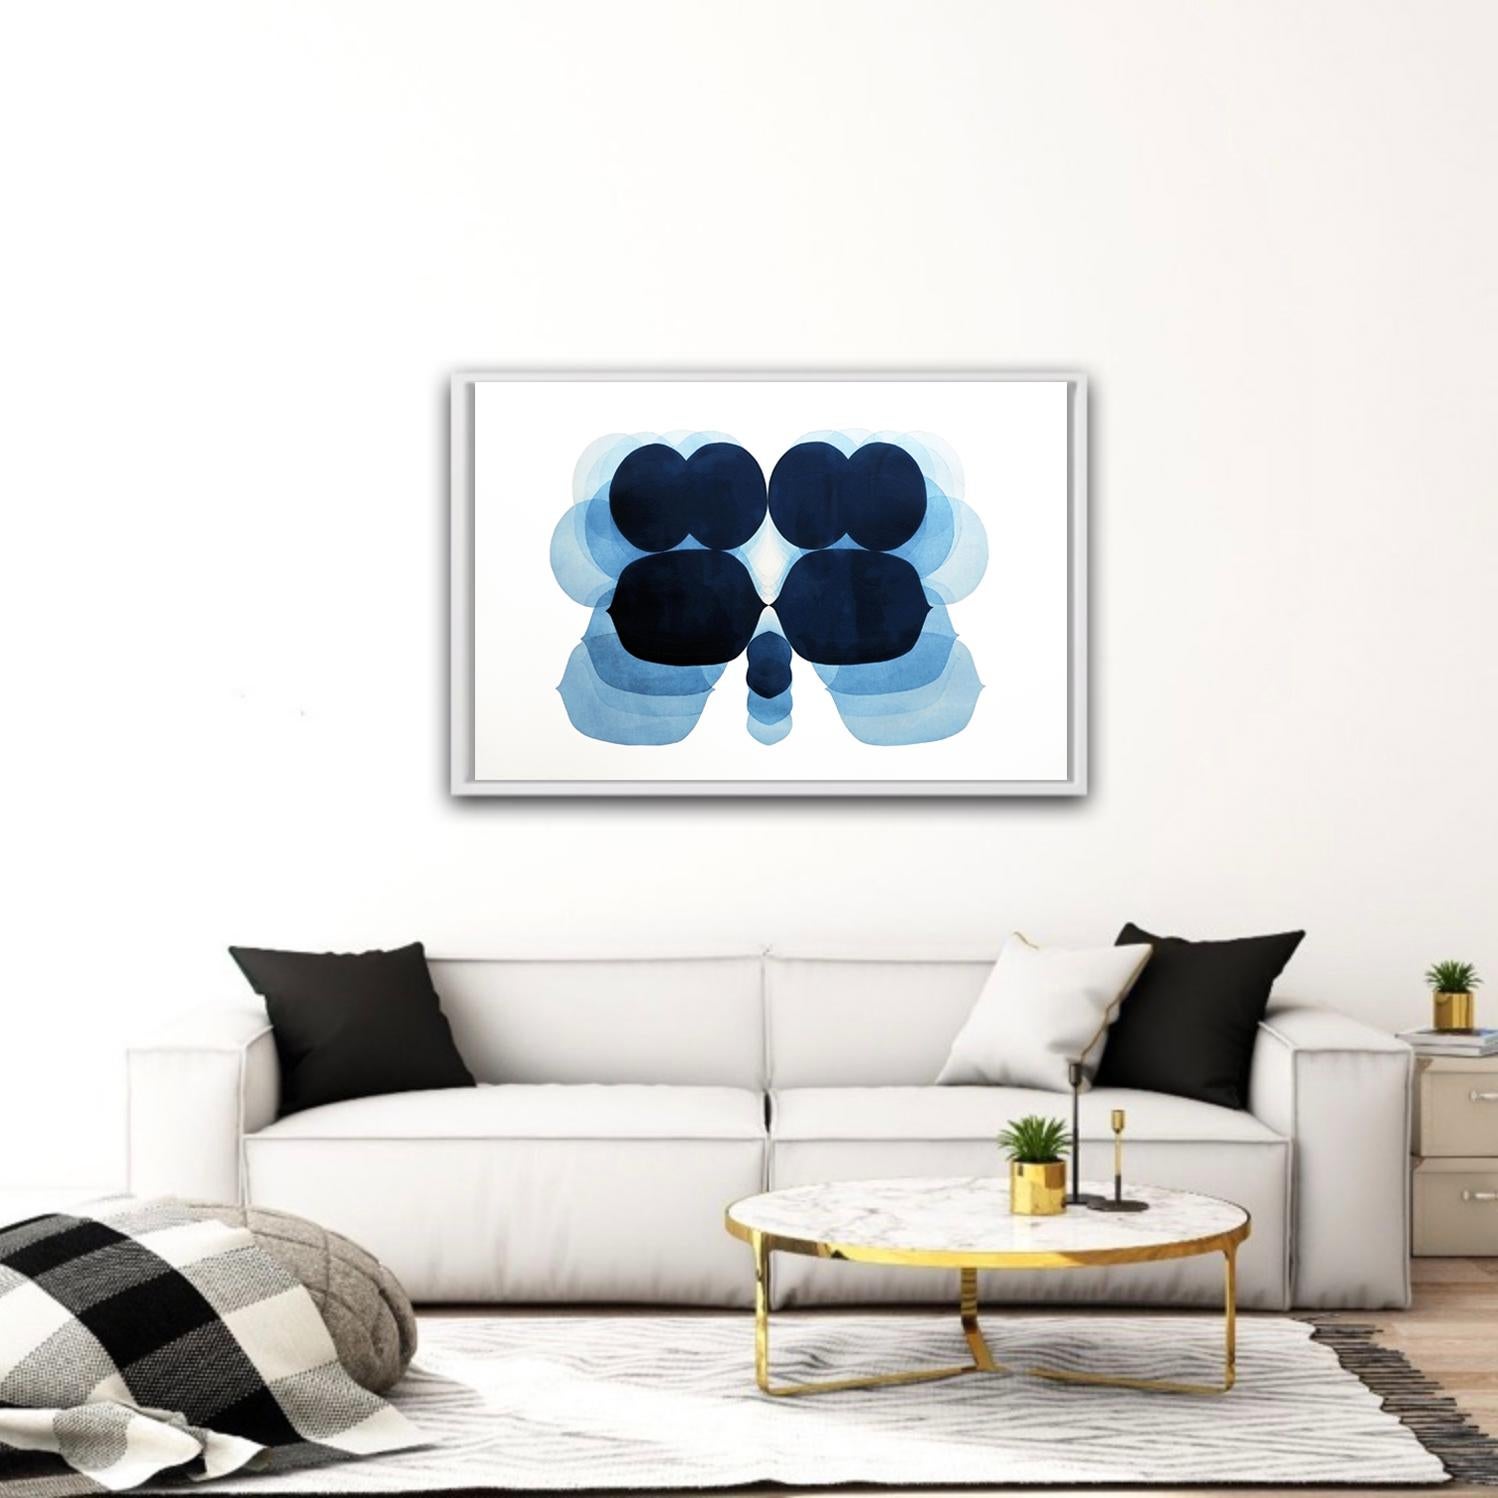 NV10, blue art, unique print, relief print, minimalist print, affordable art - Print by Jonathan Moss